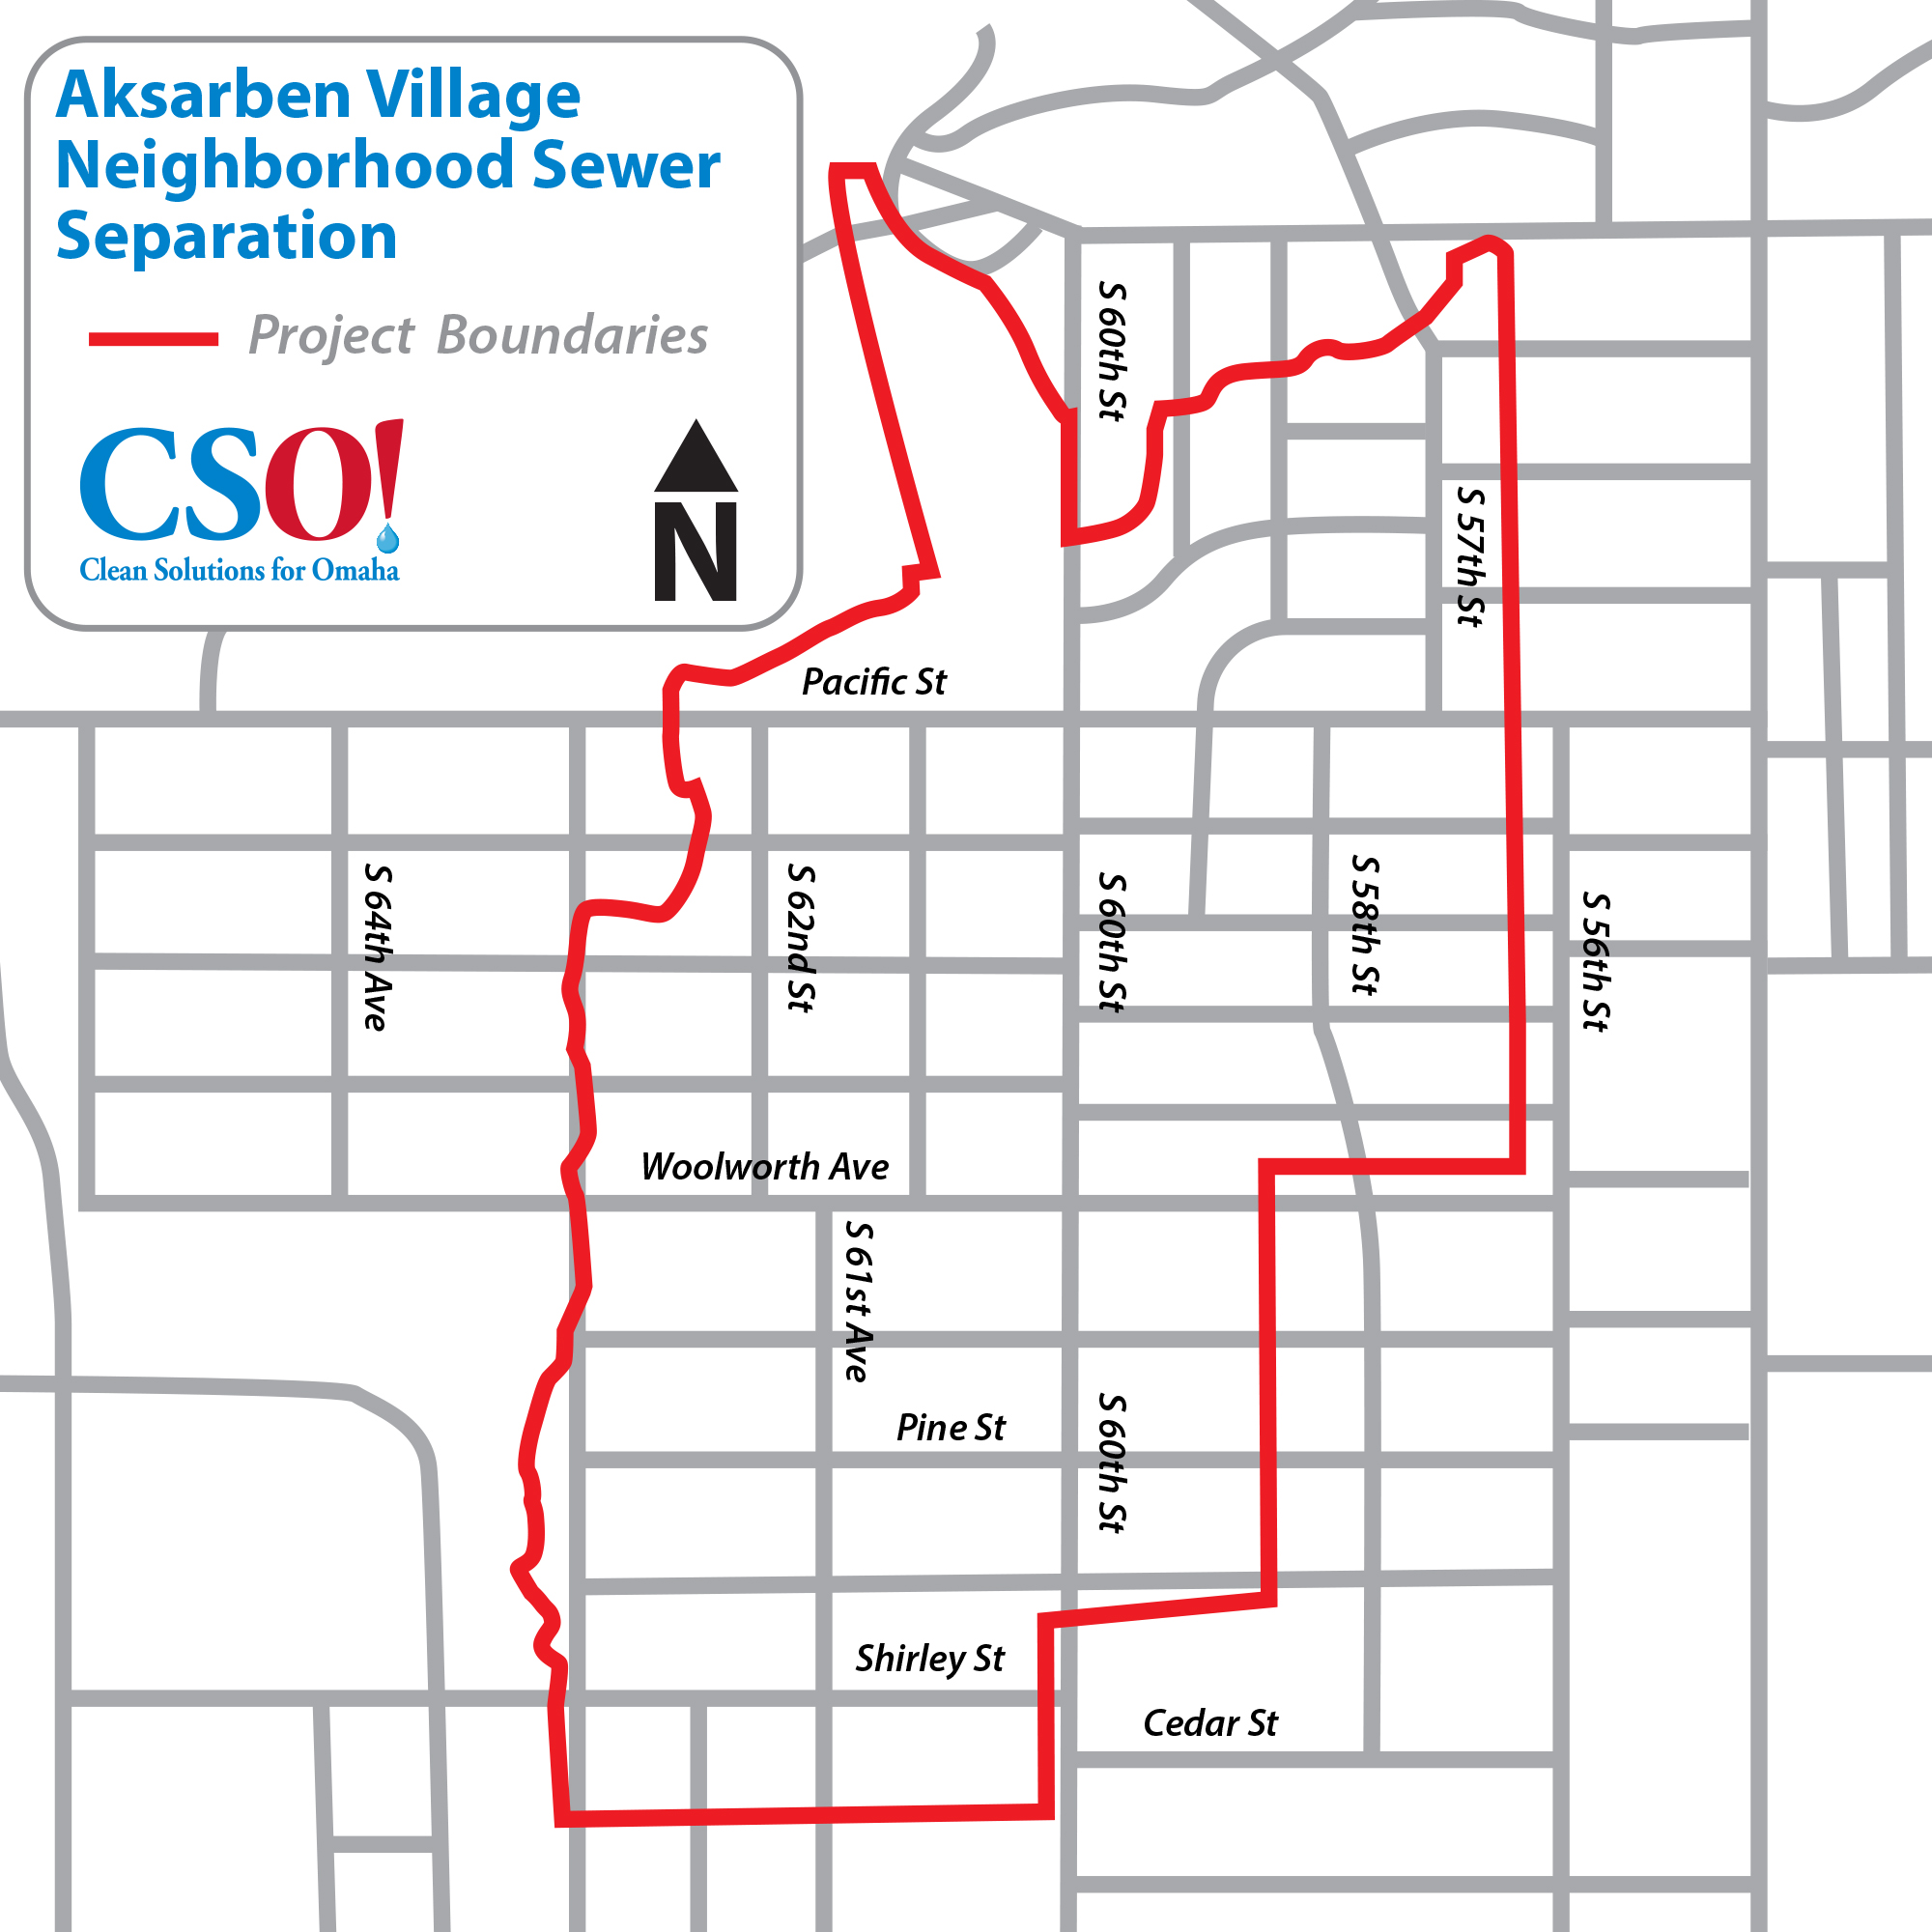 Project Map: Aksarben Village Neighborhood Sewer Separation Project